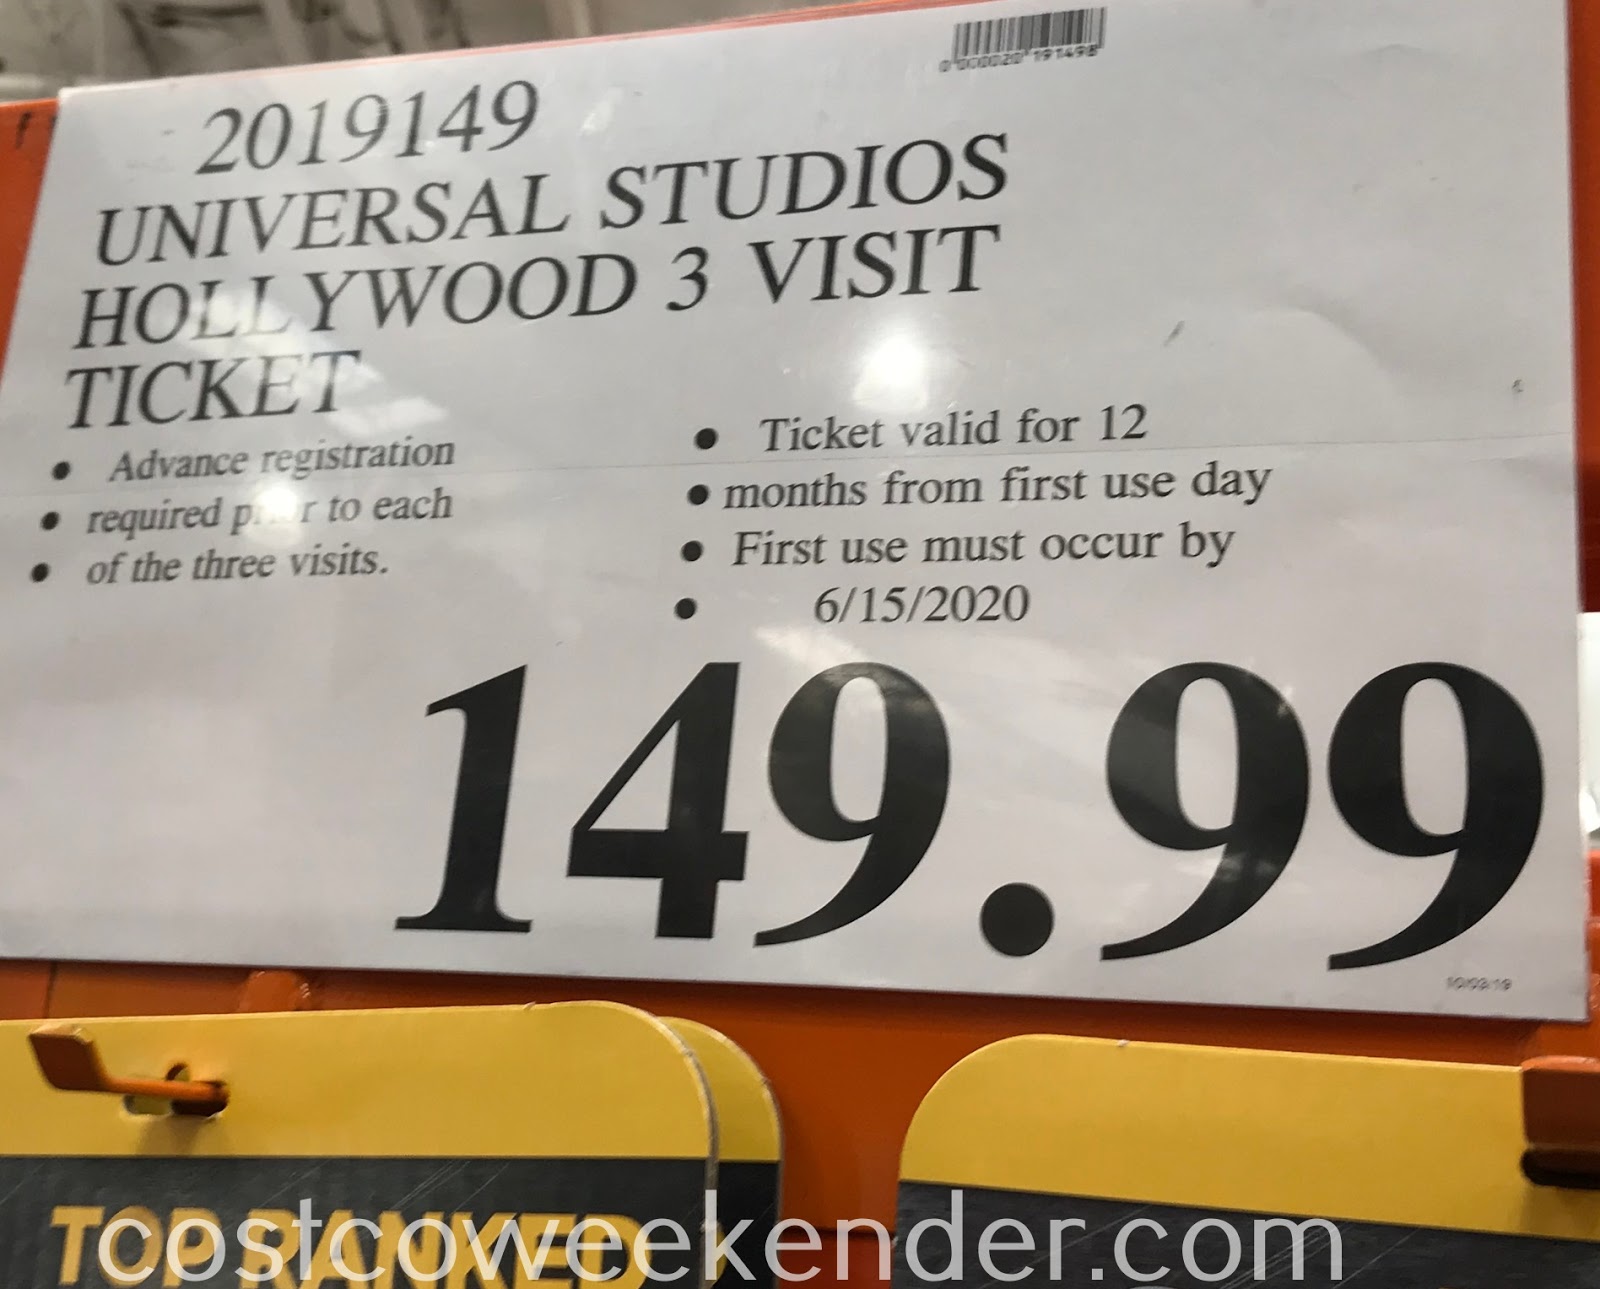 Universal Studios Hollywood 3 Visit Ticket 2020 